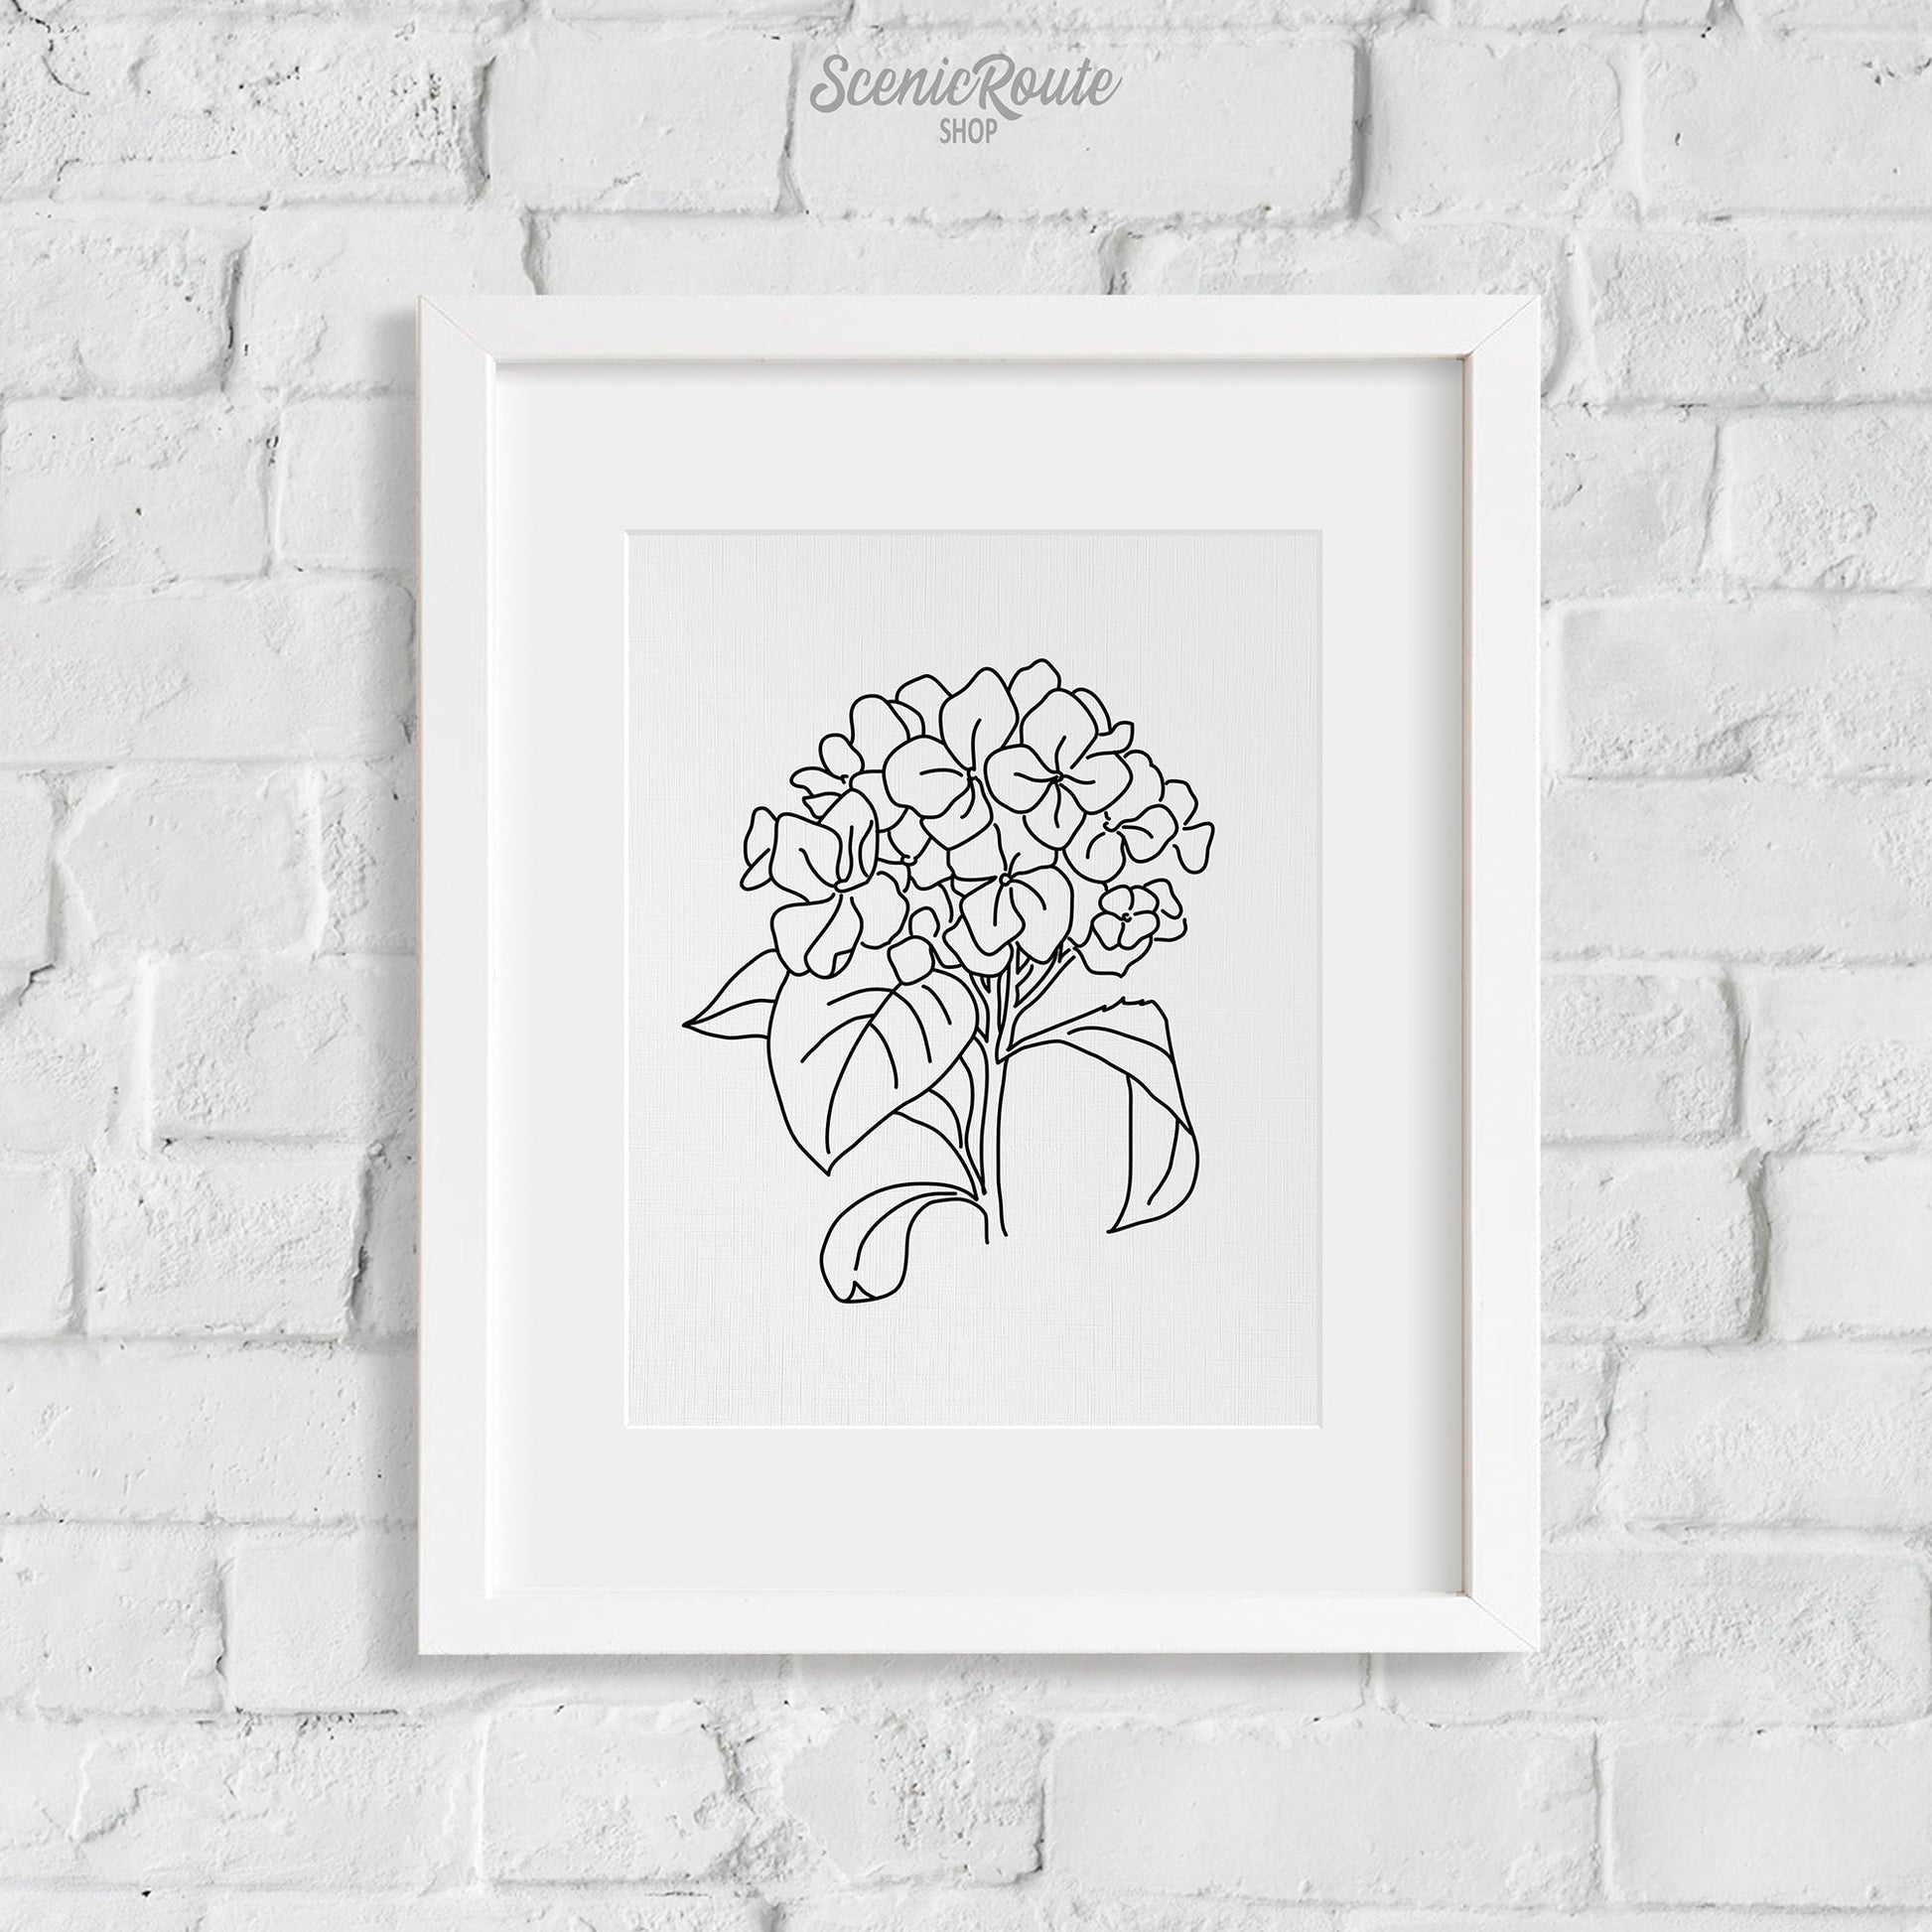 A framed line art drawing of a Hydrangea Flower on a brick wall